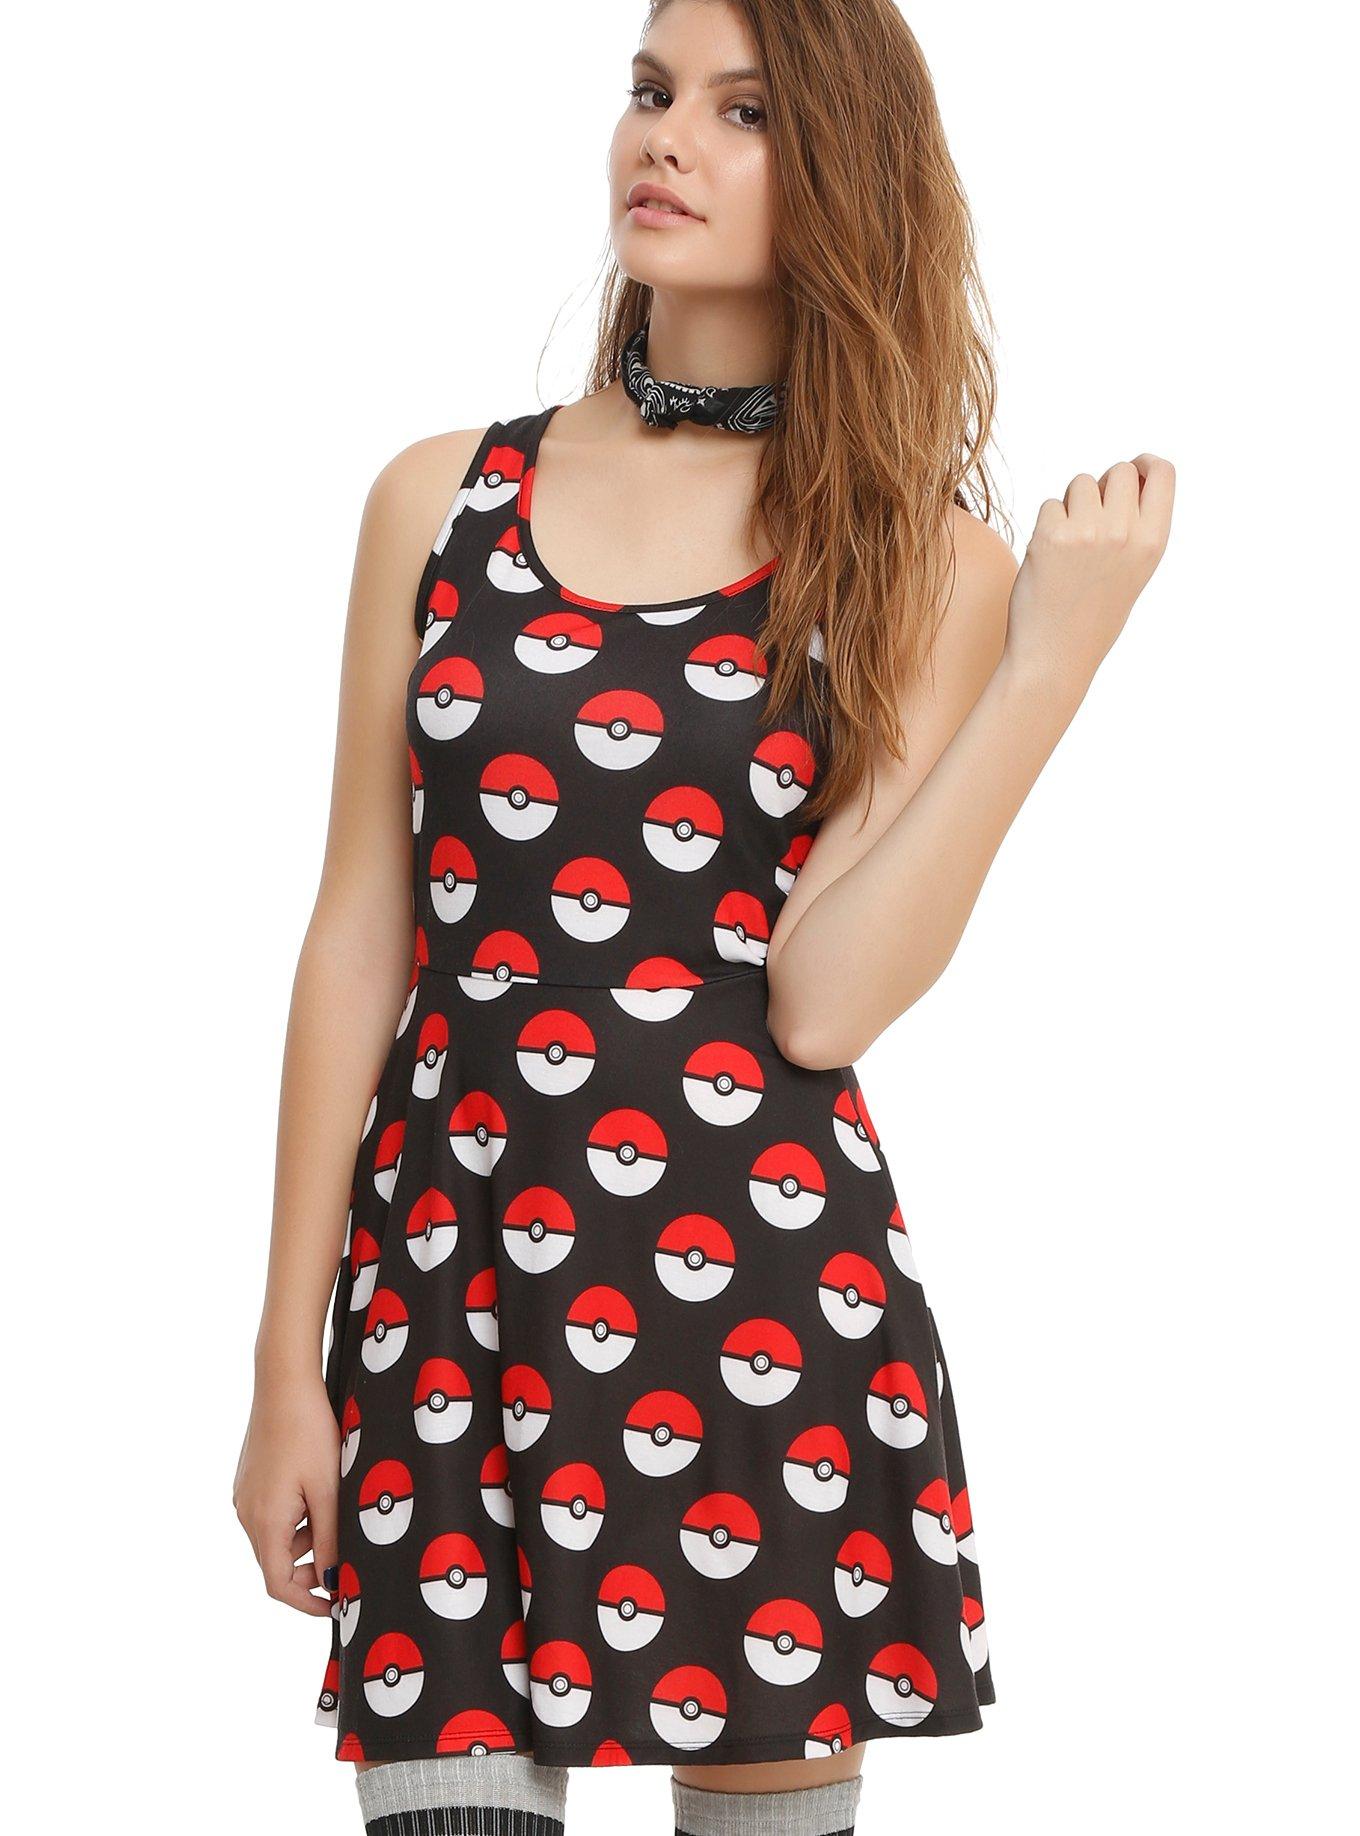 Pokemon Poke Ball Print Dress Hot Topic